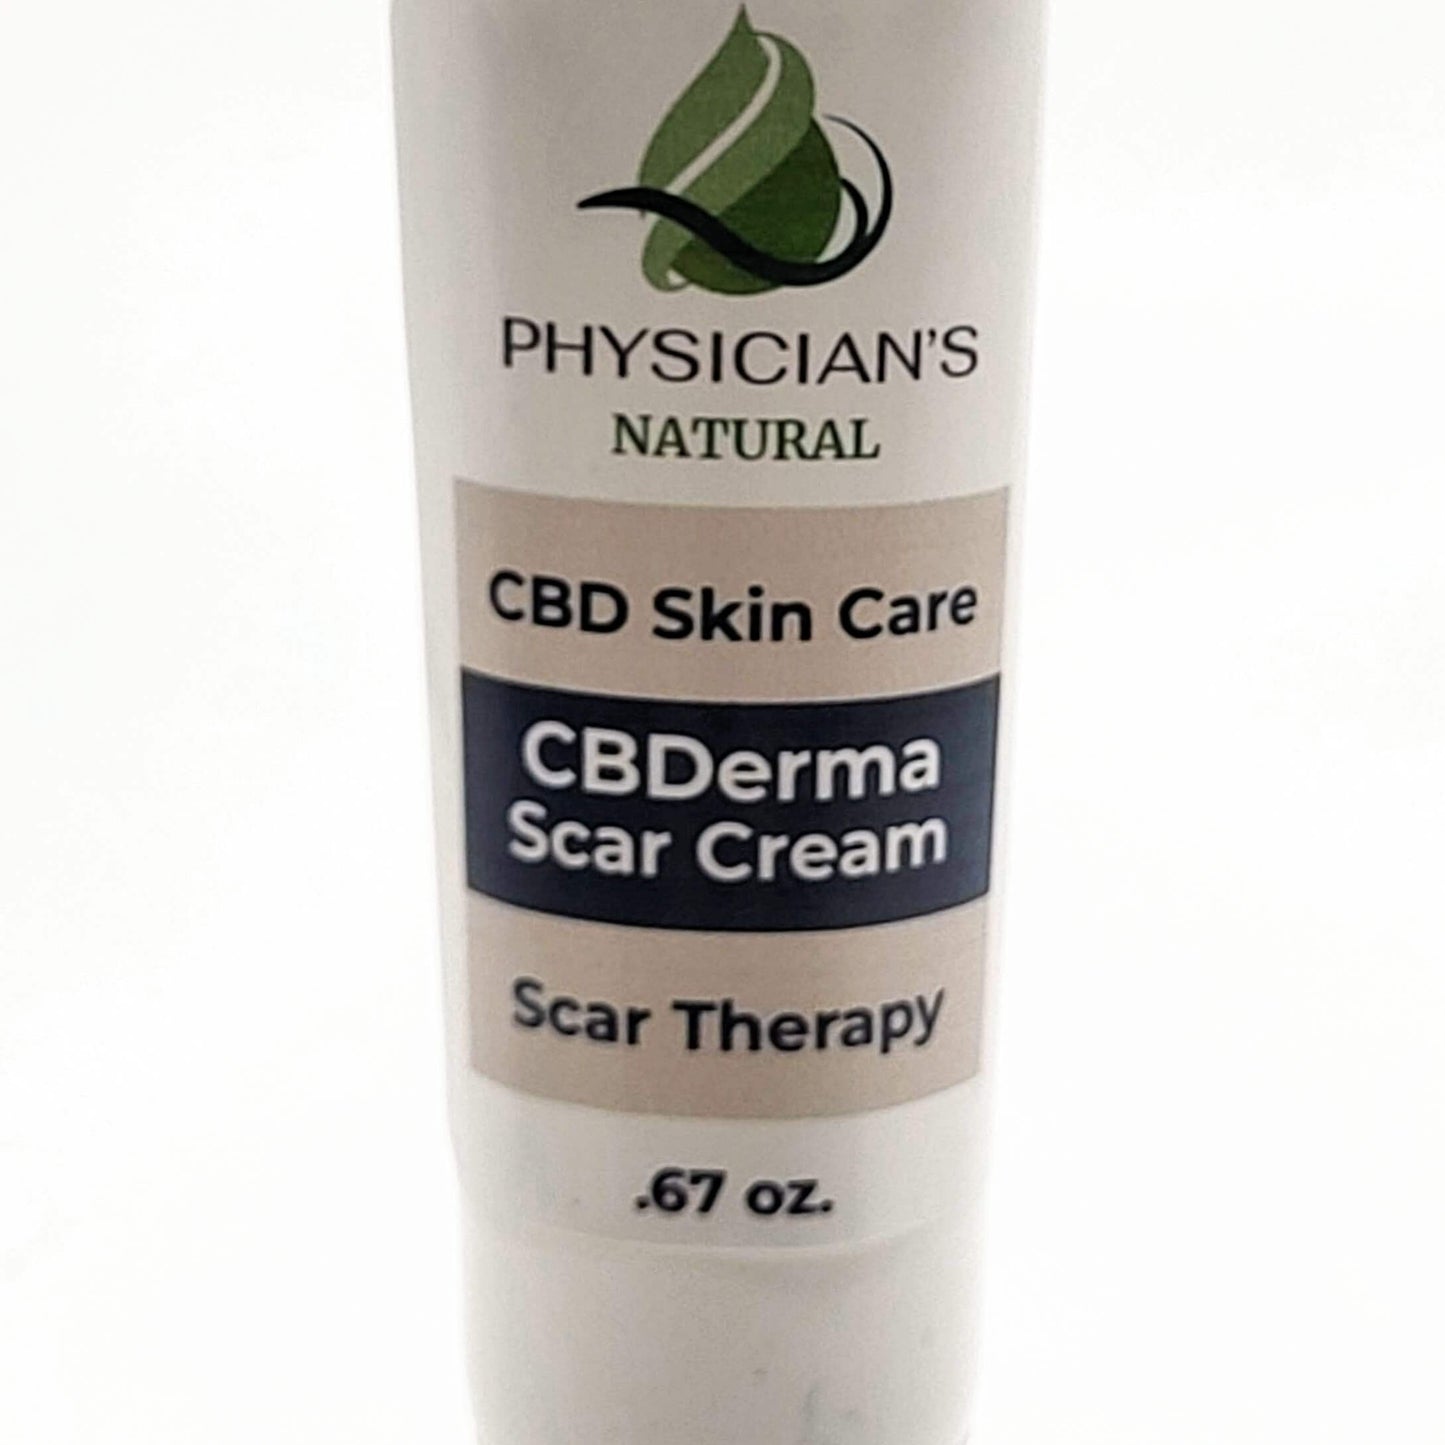 CBDerma Scar Cream